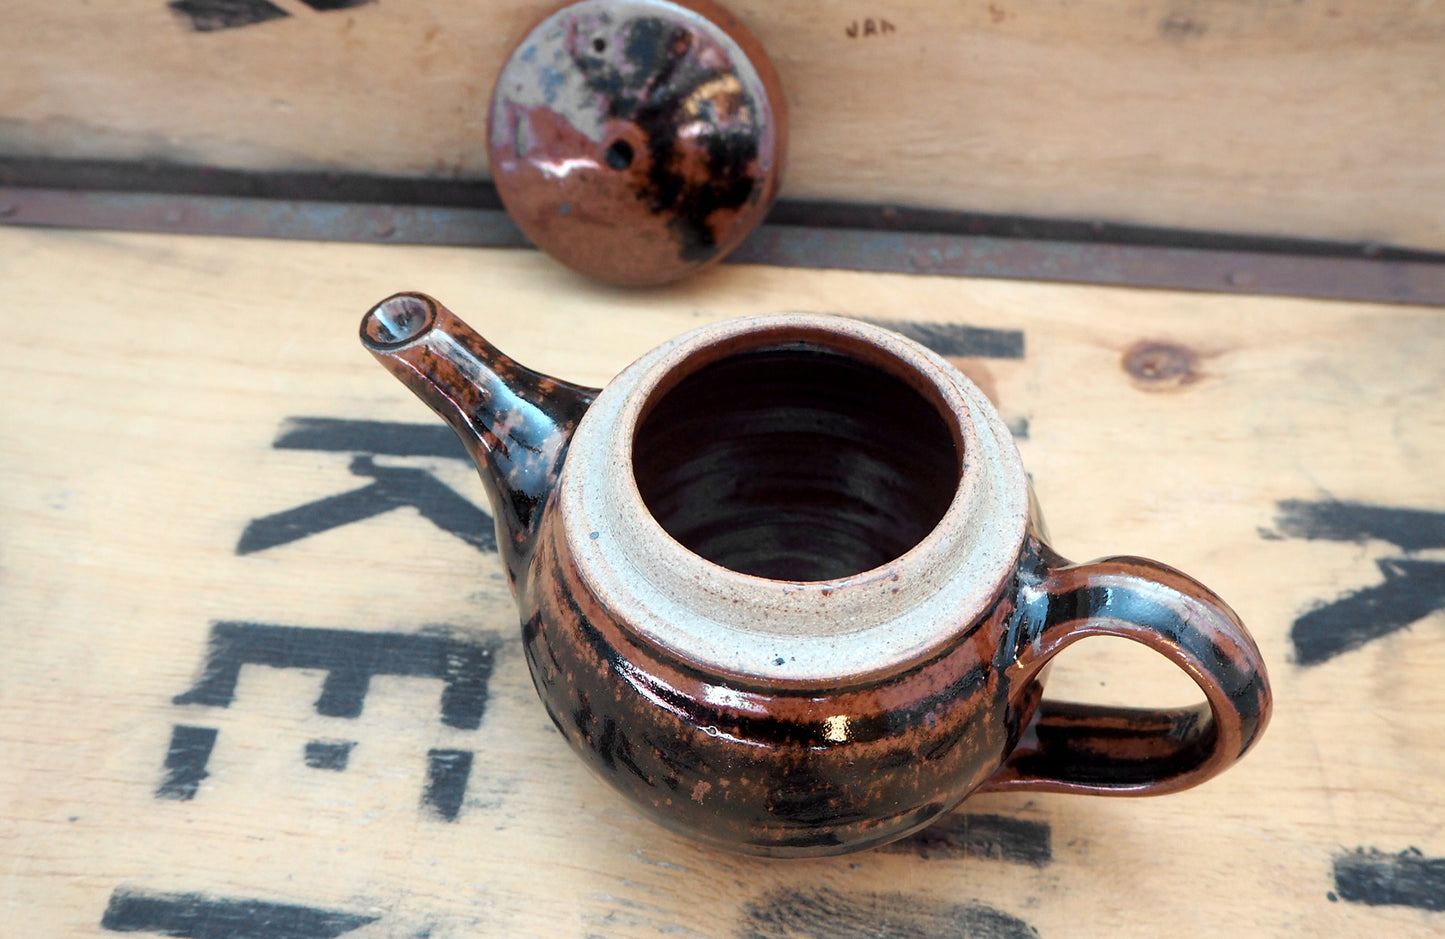 Tenmoku Teapot (1-2 cup) by Jack Welbourne